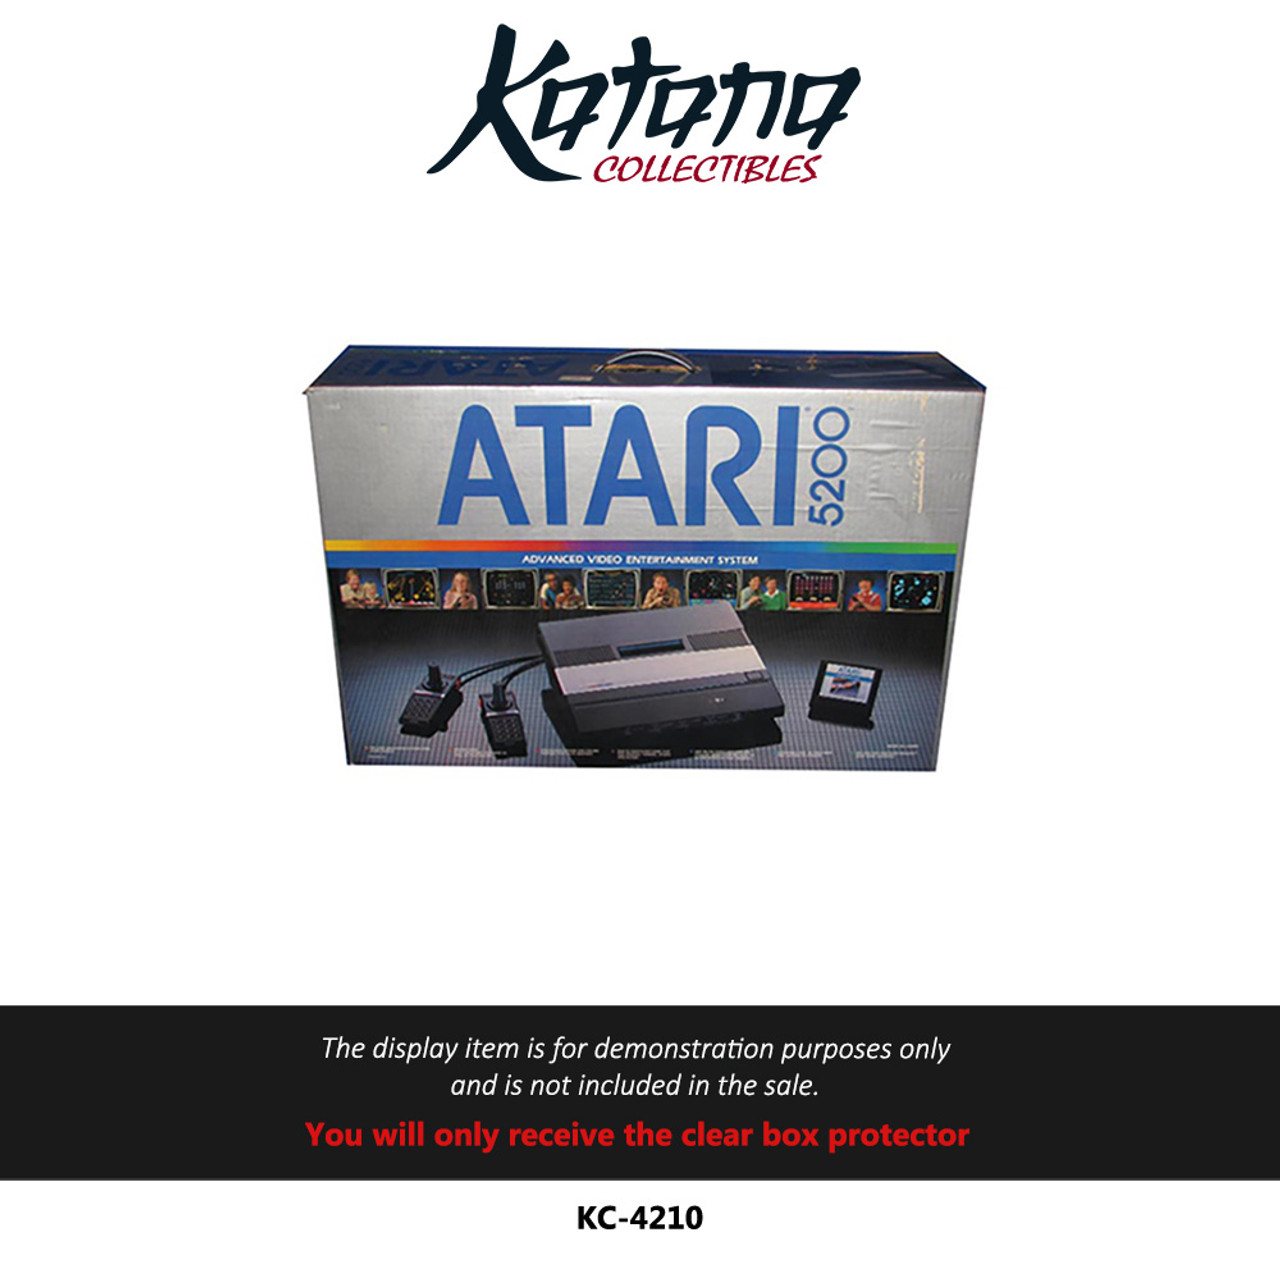 Katana Collectibles Protector For Atari 5200 Console 2 Ports Version